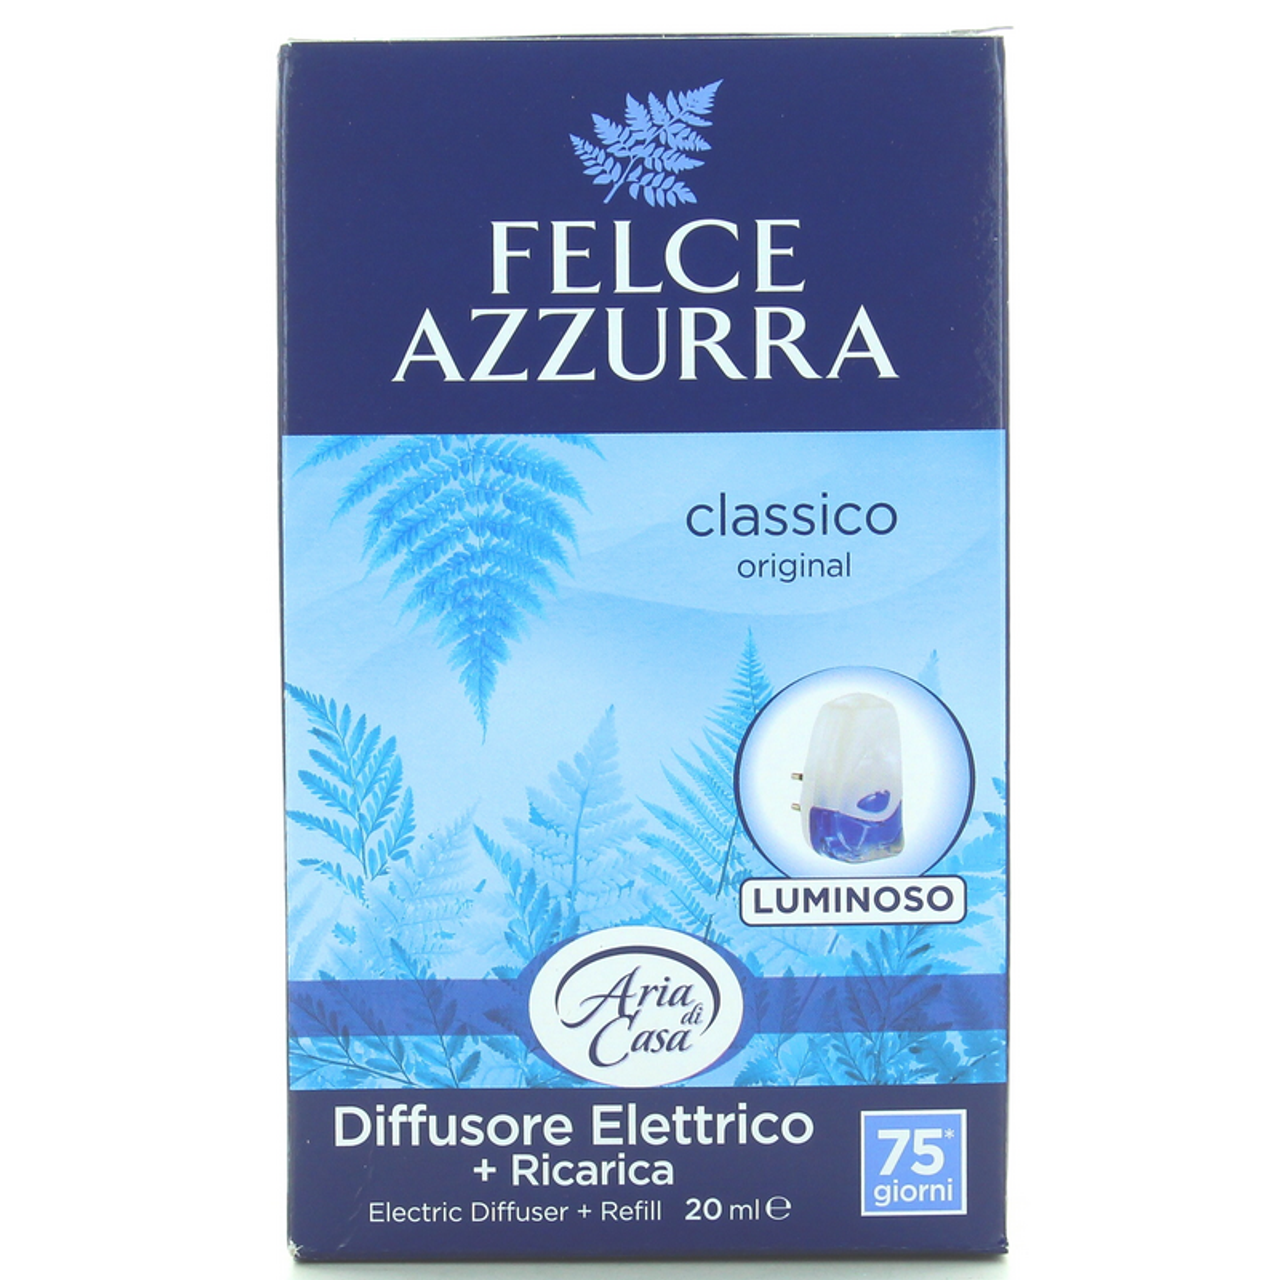 FELCE AZZURRA - deodorante per ambiente spray vaniglia dorata